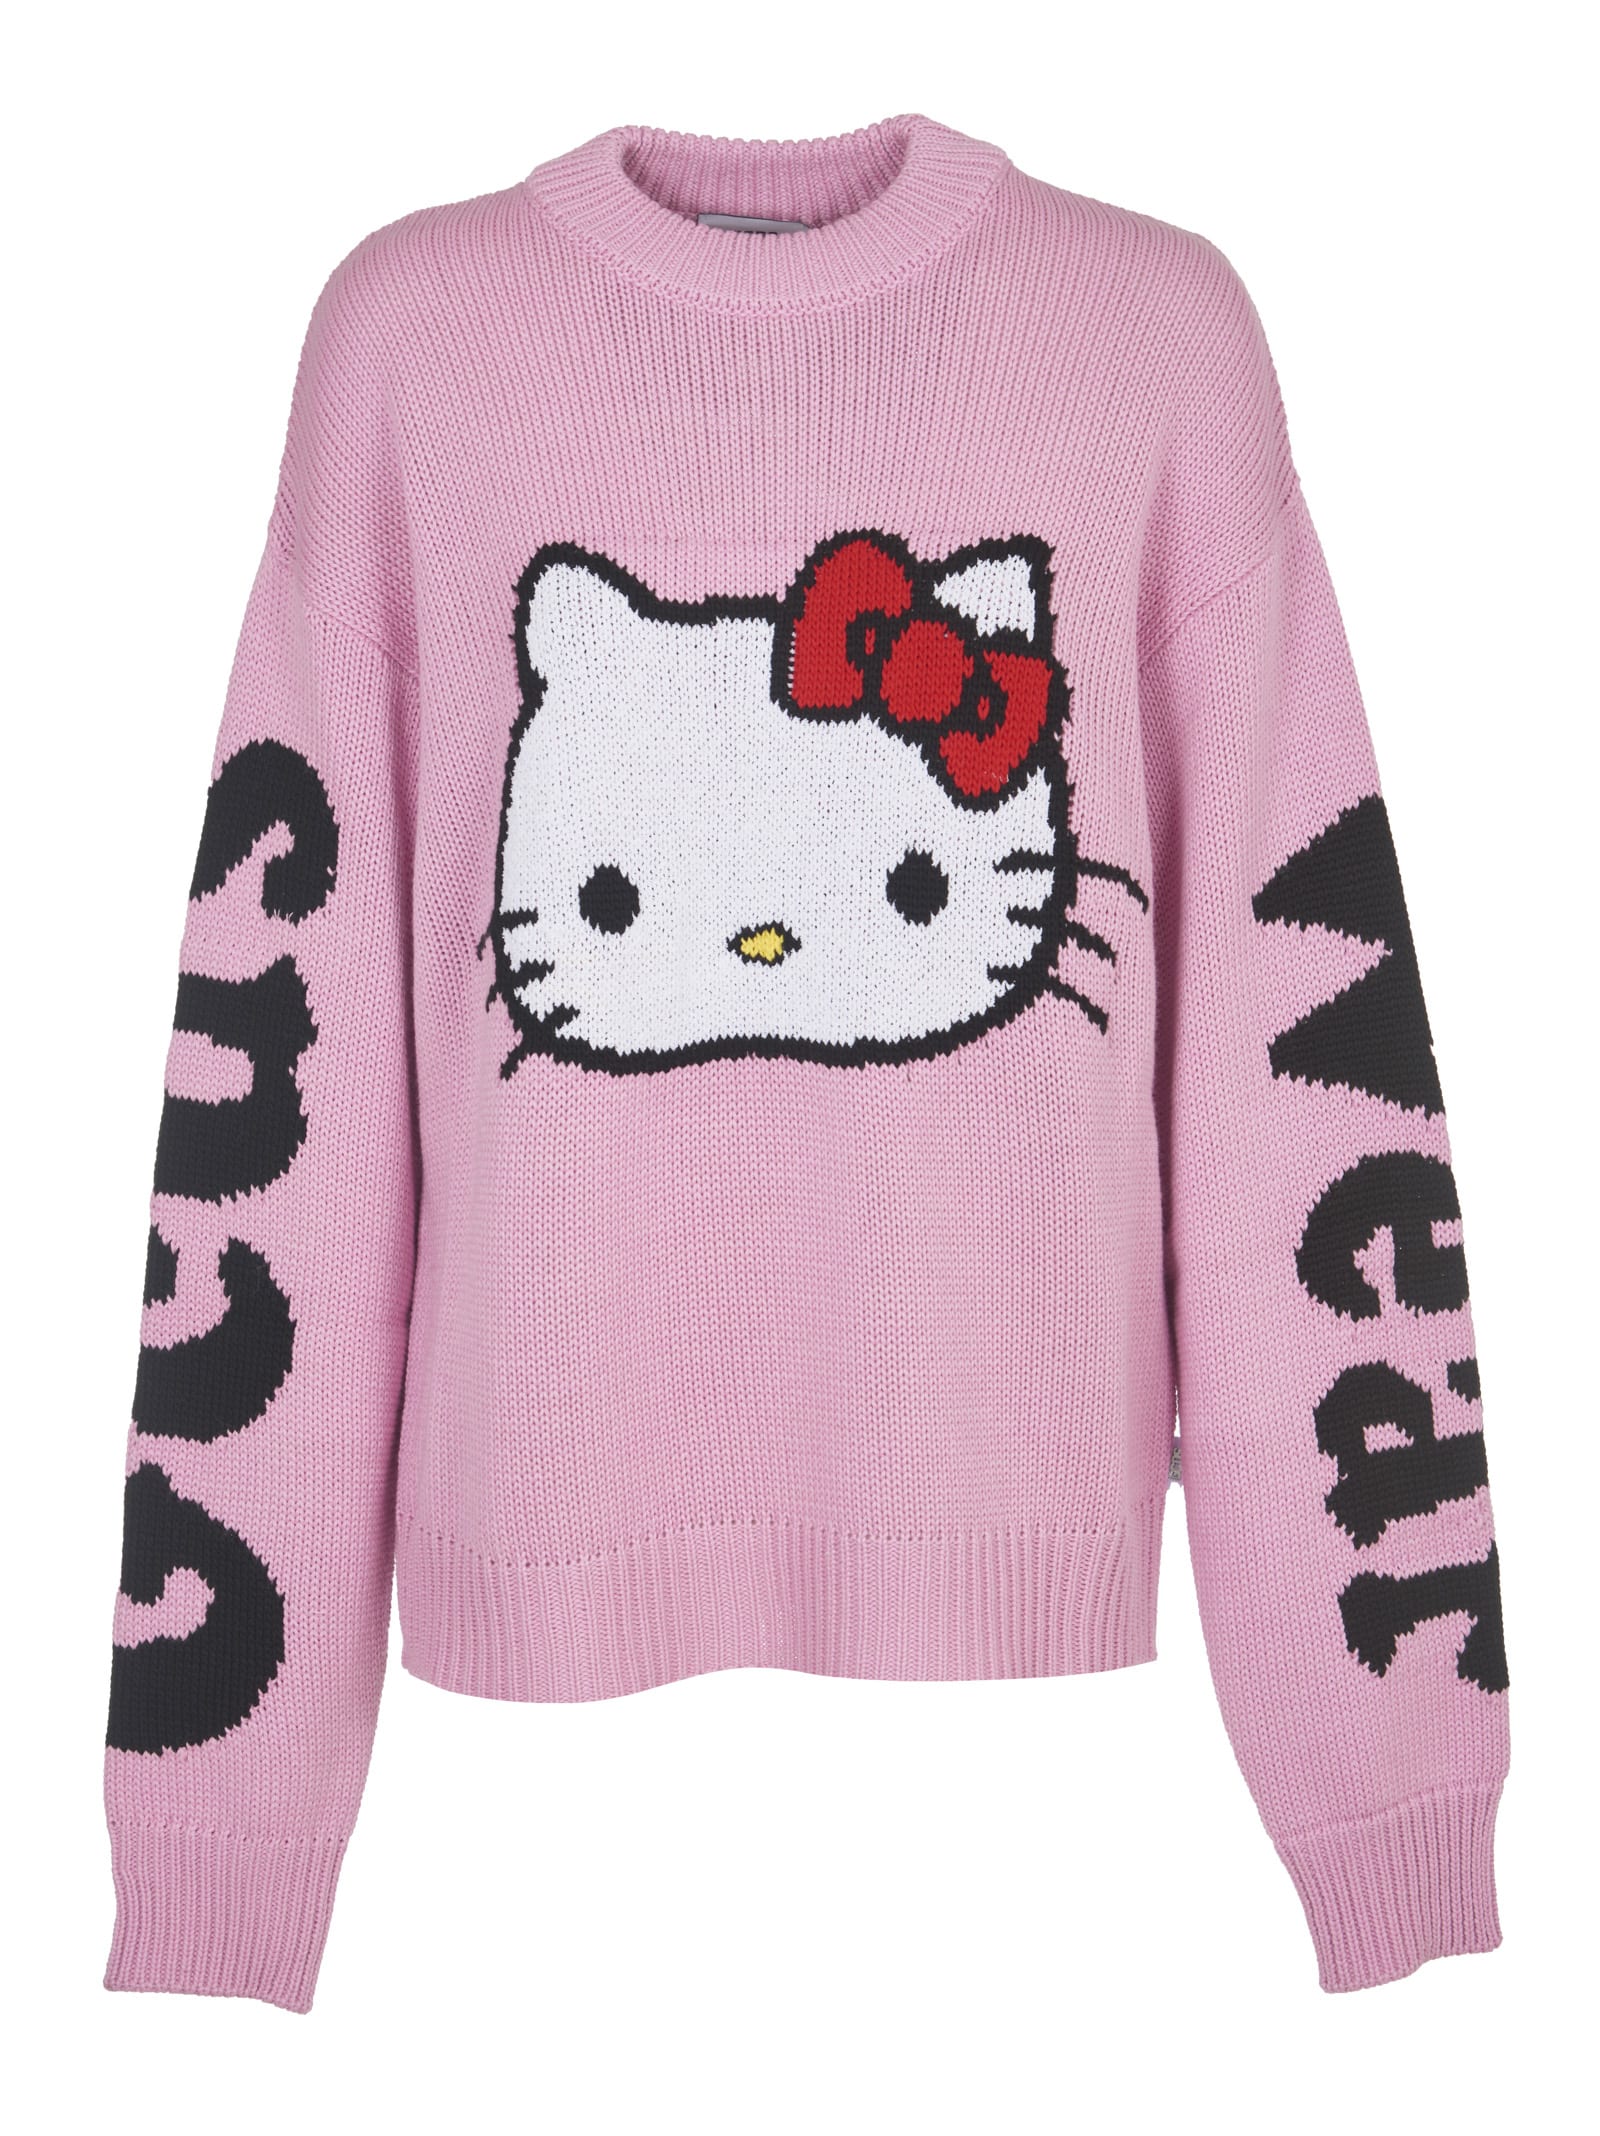 Gcds Hello Kitty Cotton T-shirt Dress - Farfetch